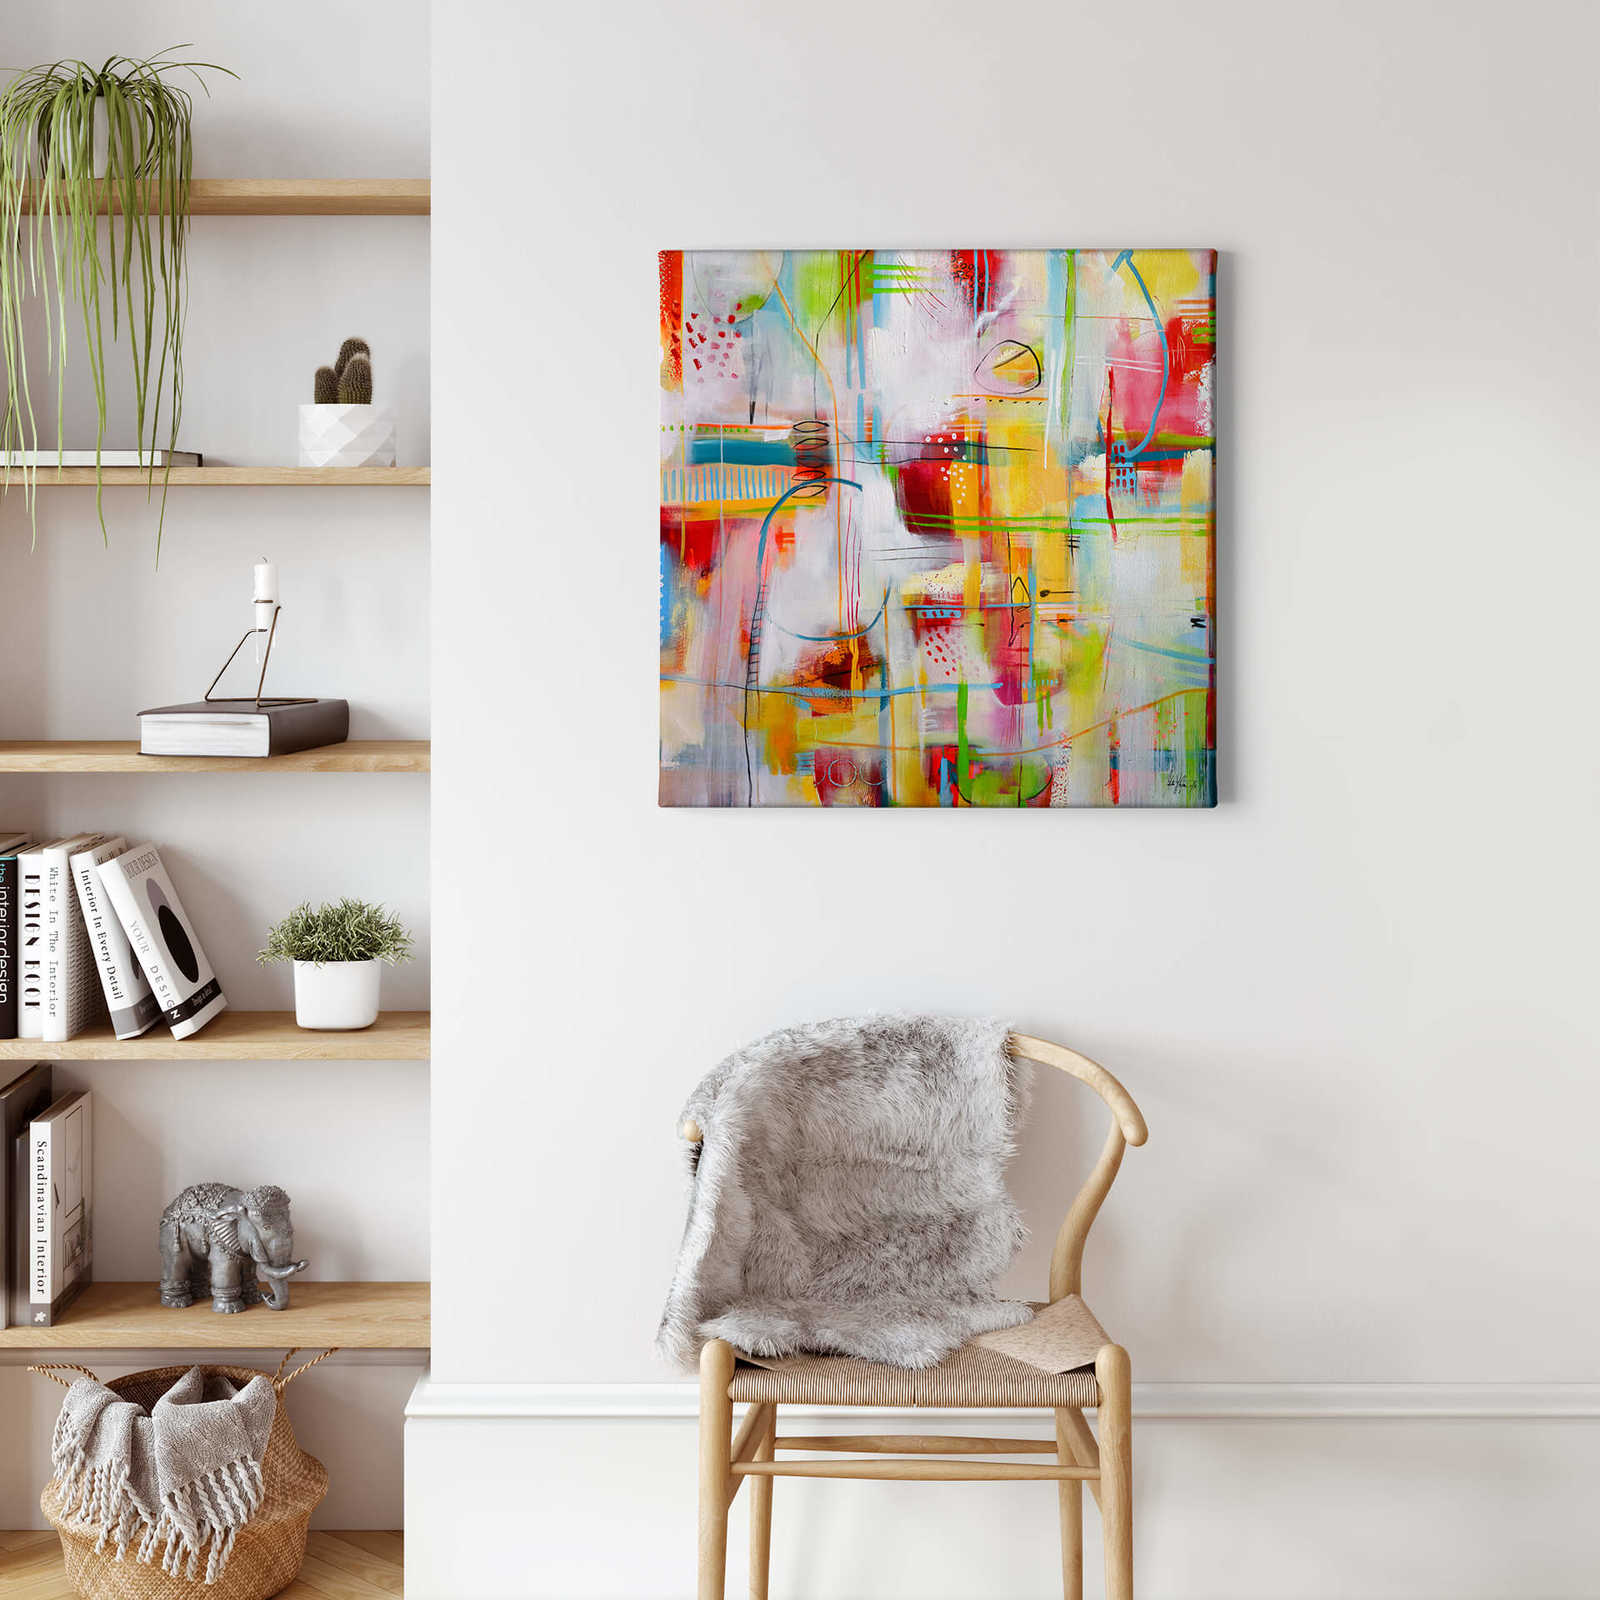             Fedrau Leinwandbild abstrakte Kunst – 0,50 m x 0,50 m
        